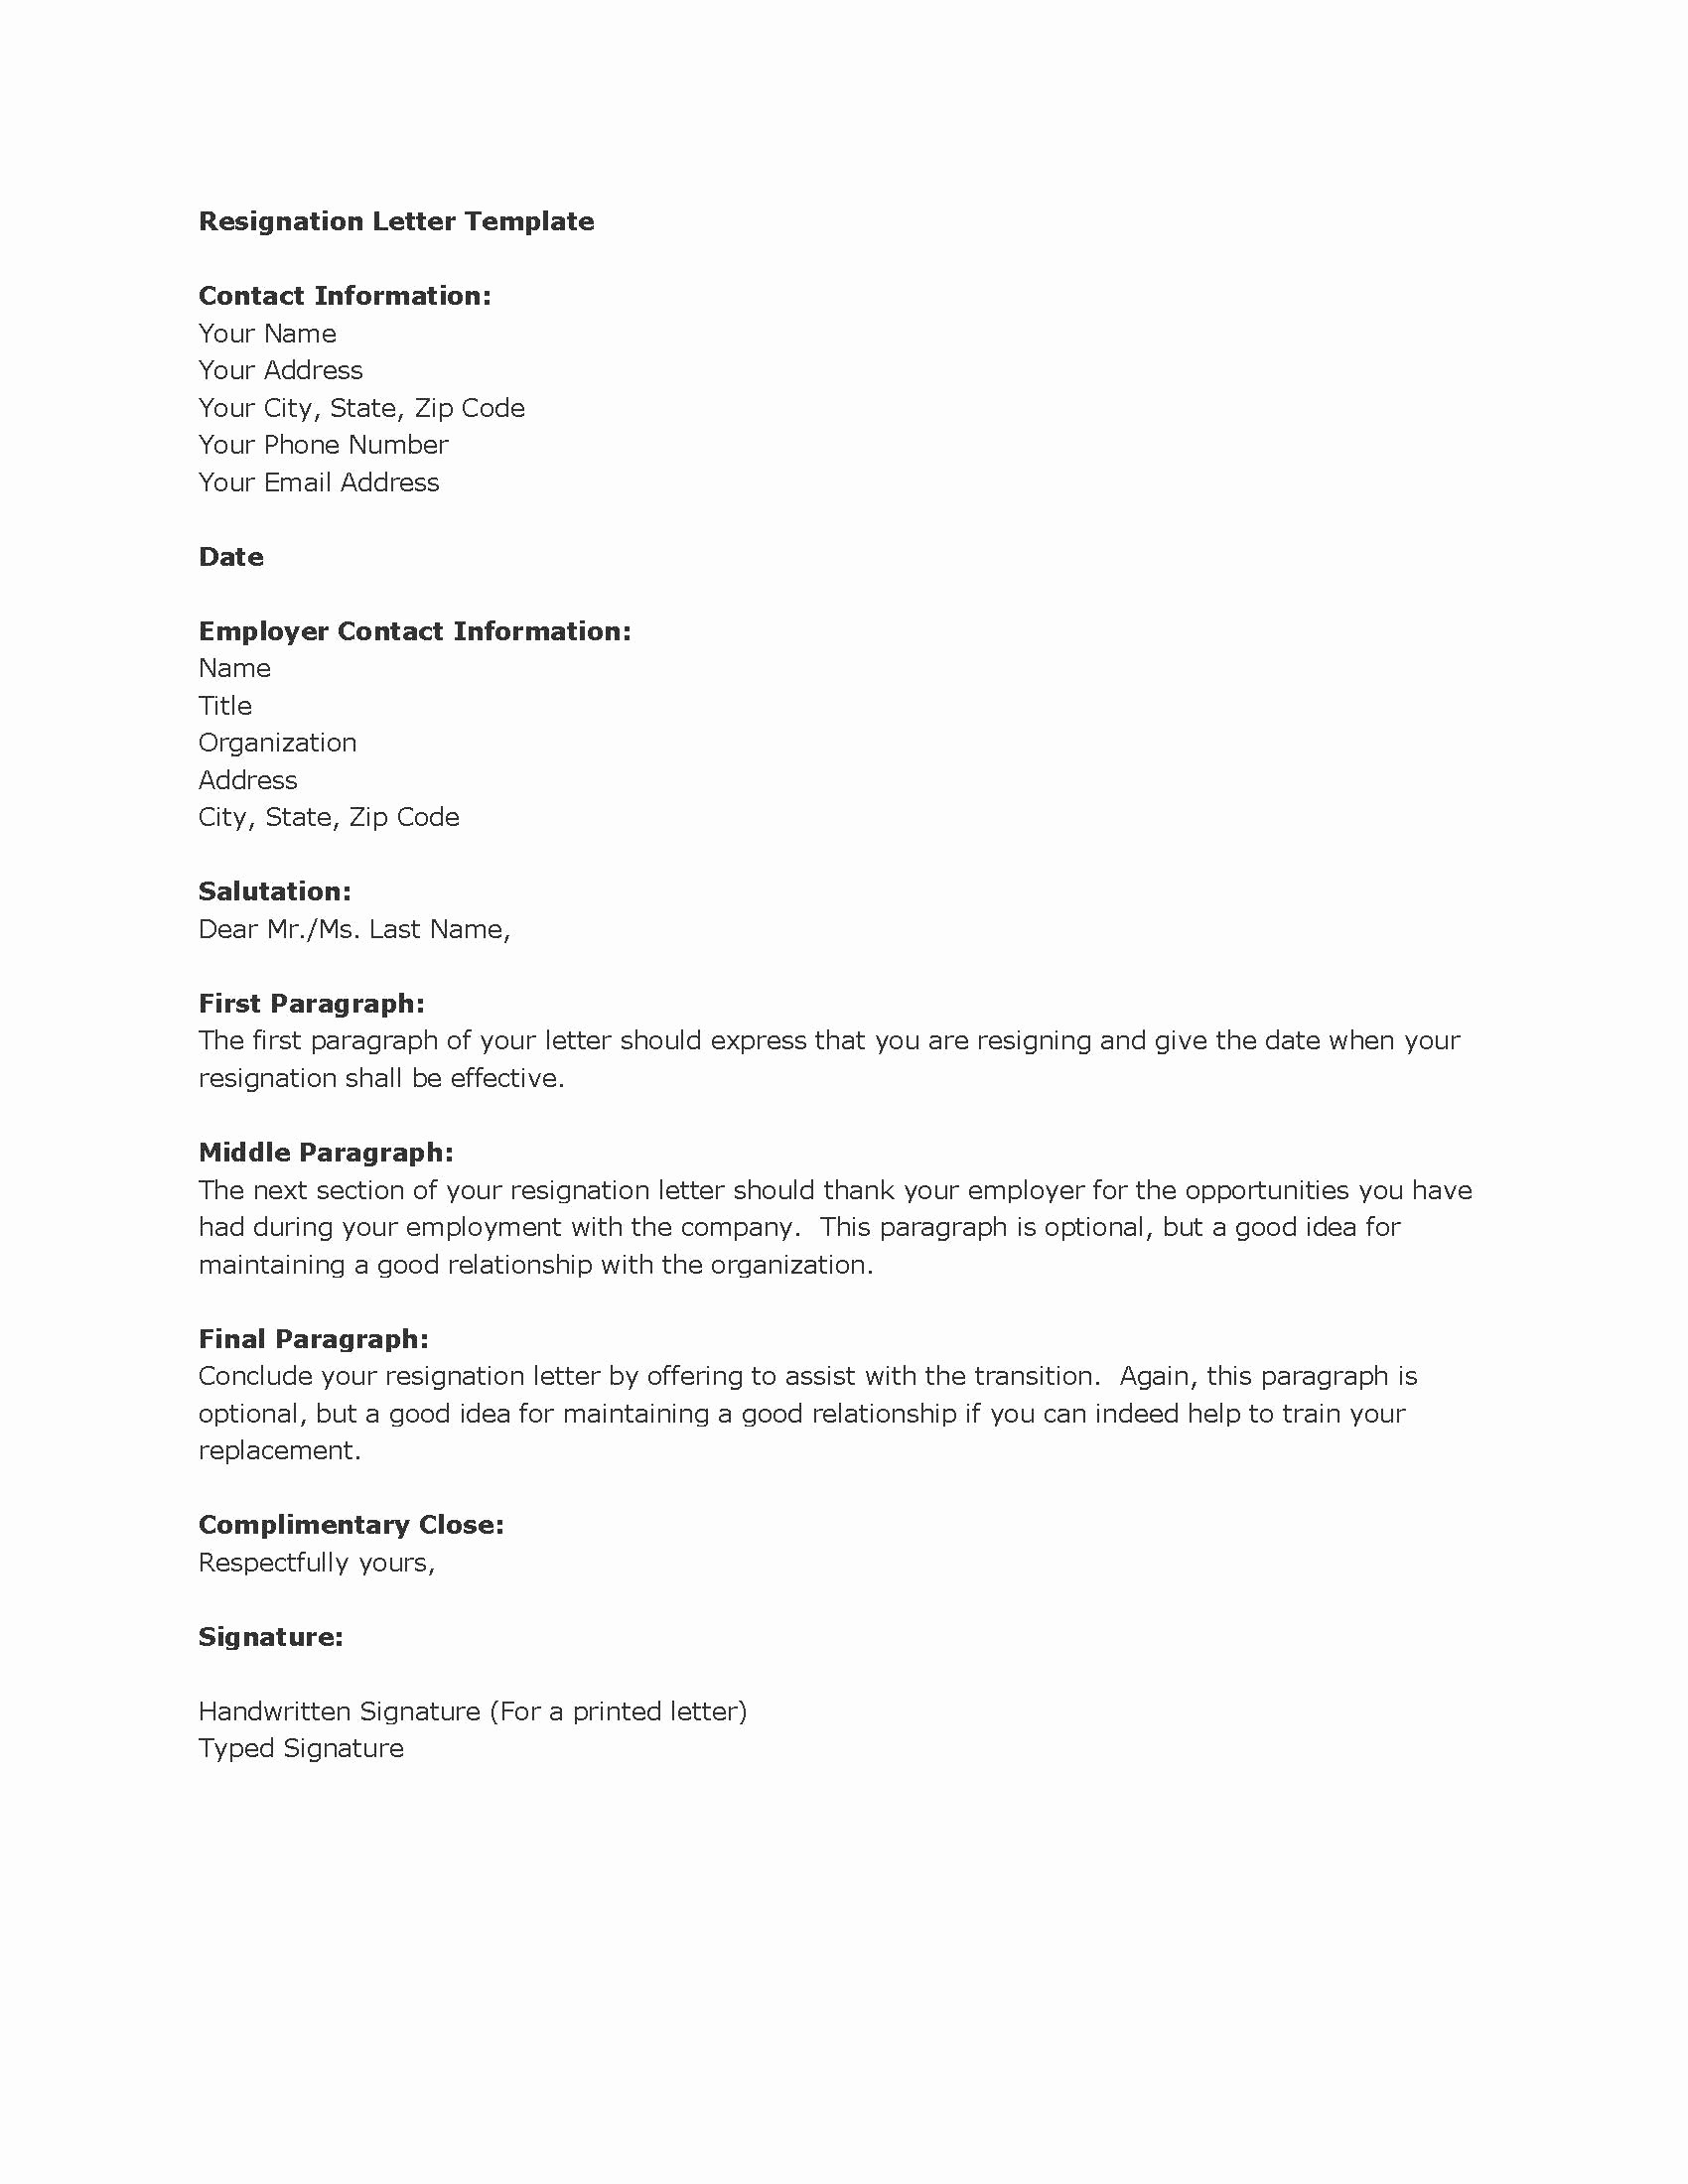 Letter Of Resignation Template Microsoft Inspirational Best Letter Of Resignation Template